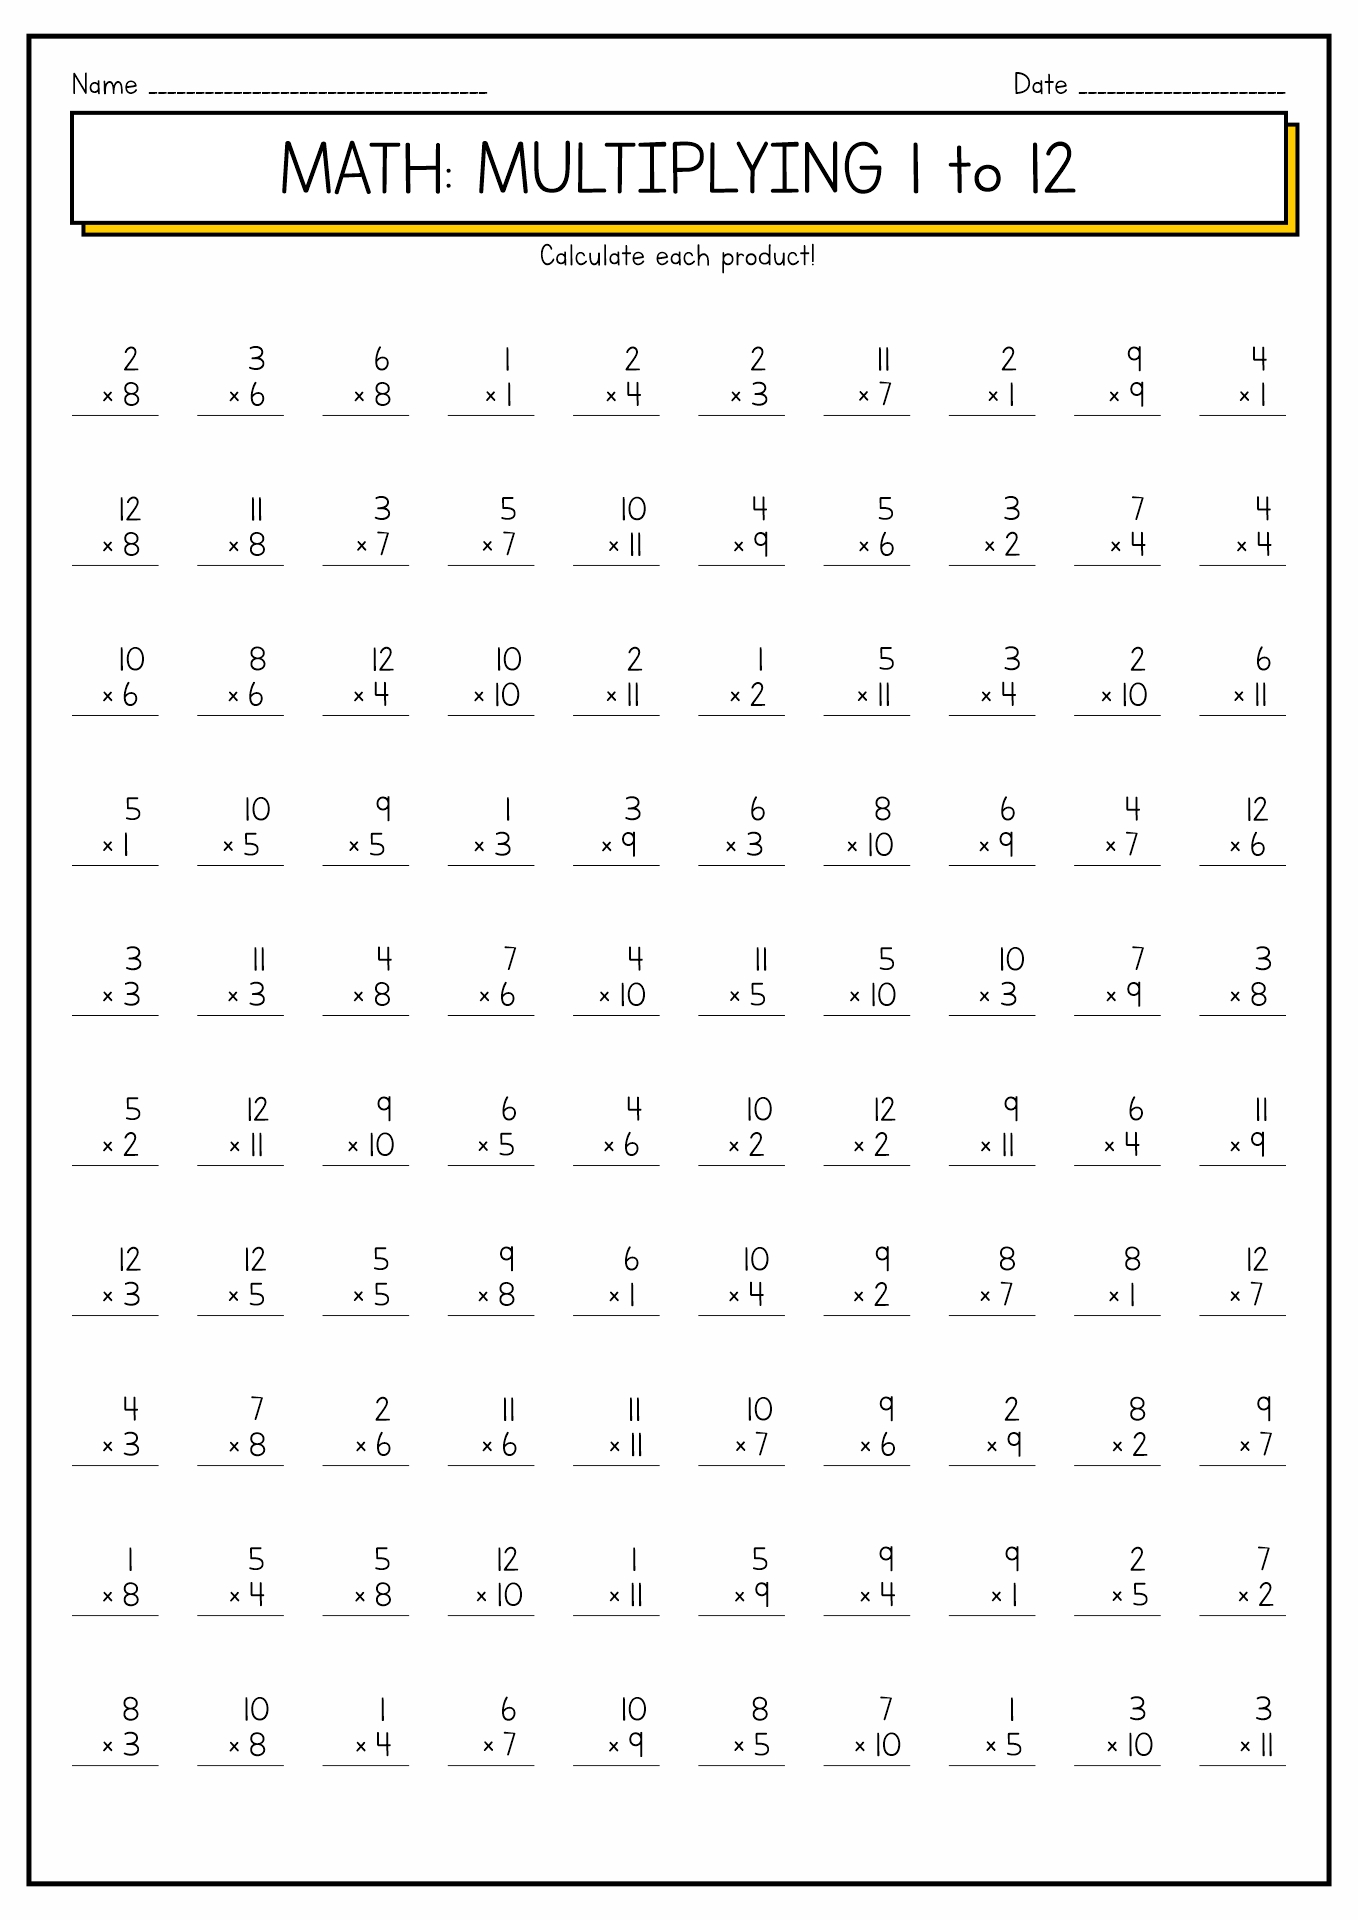 Multiplication Worksheets 100 Times Tables 1-12 Image